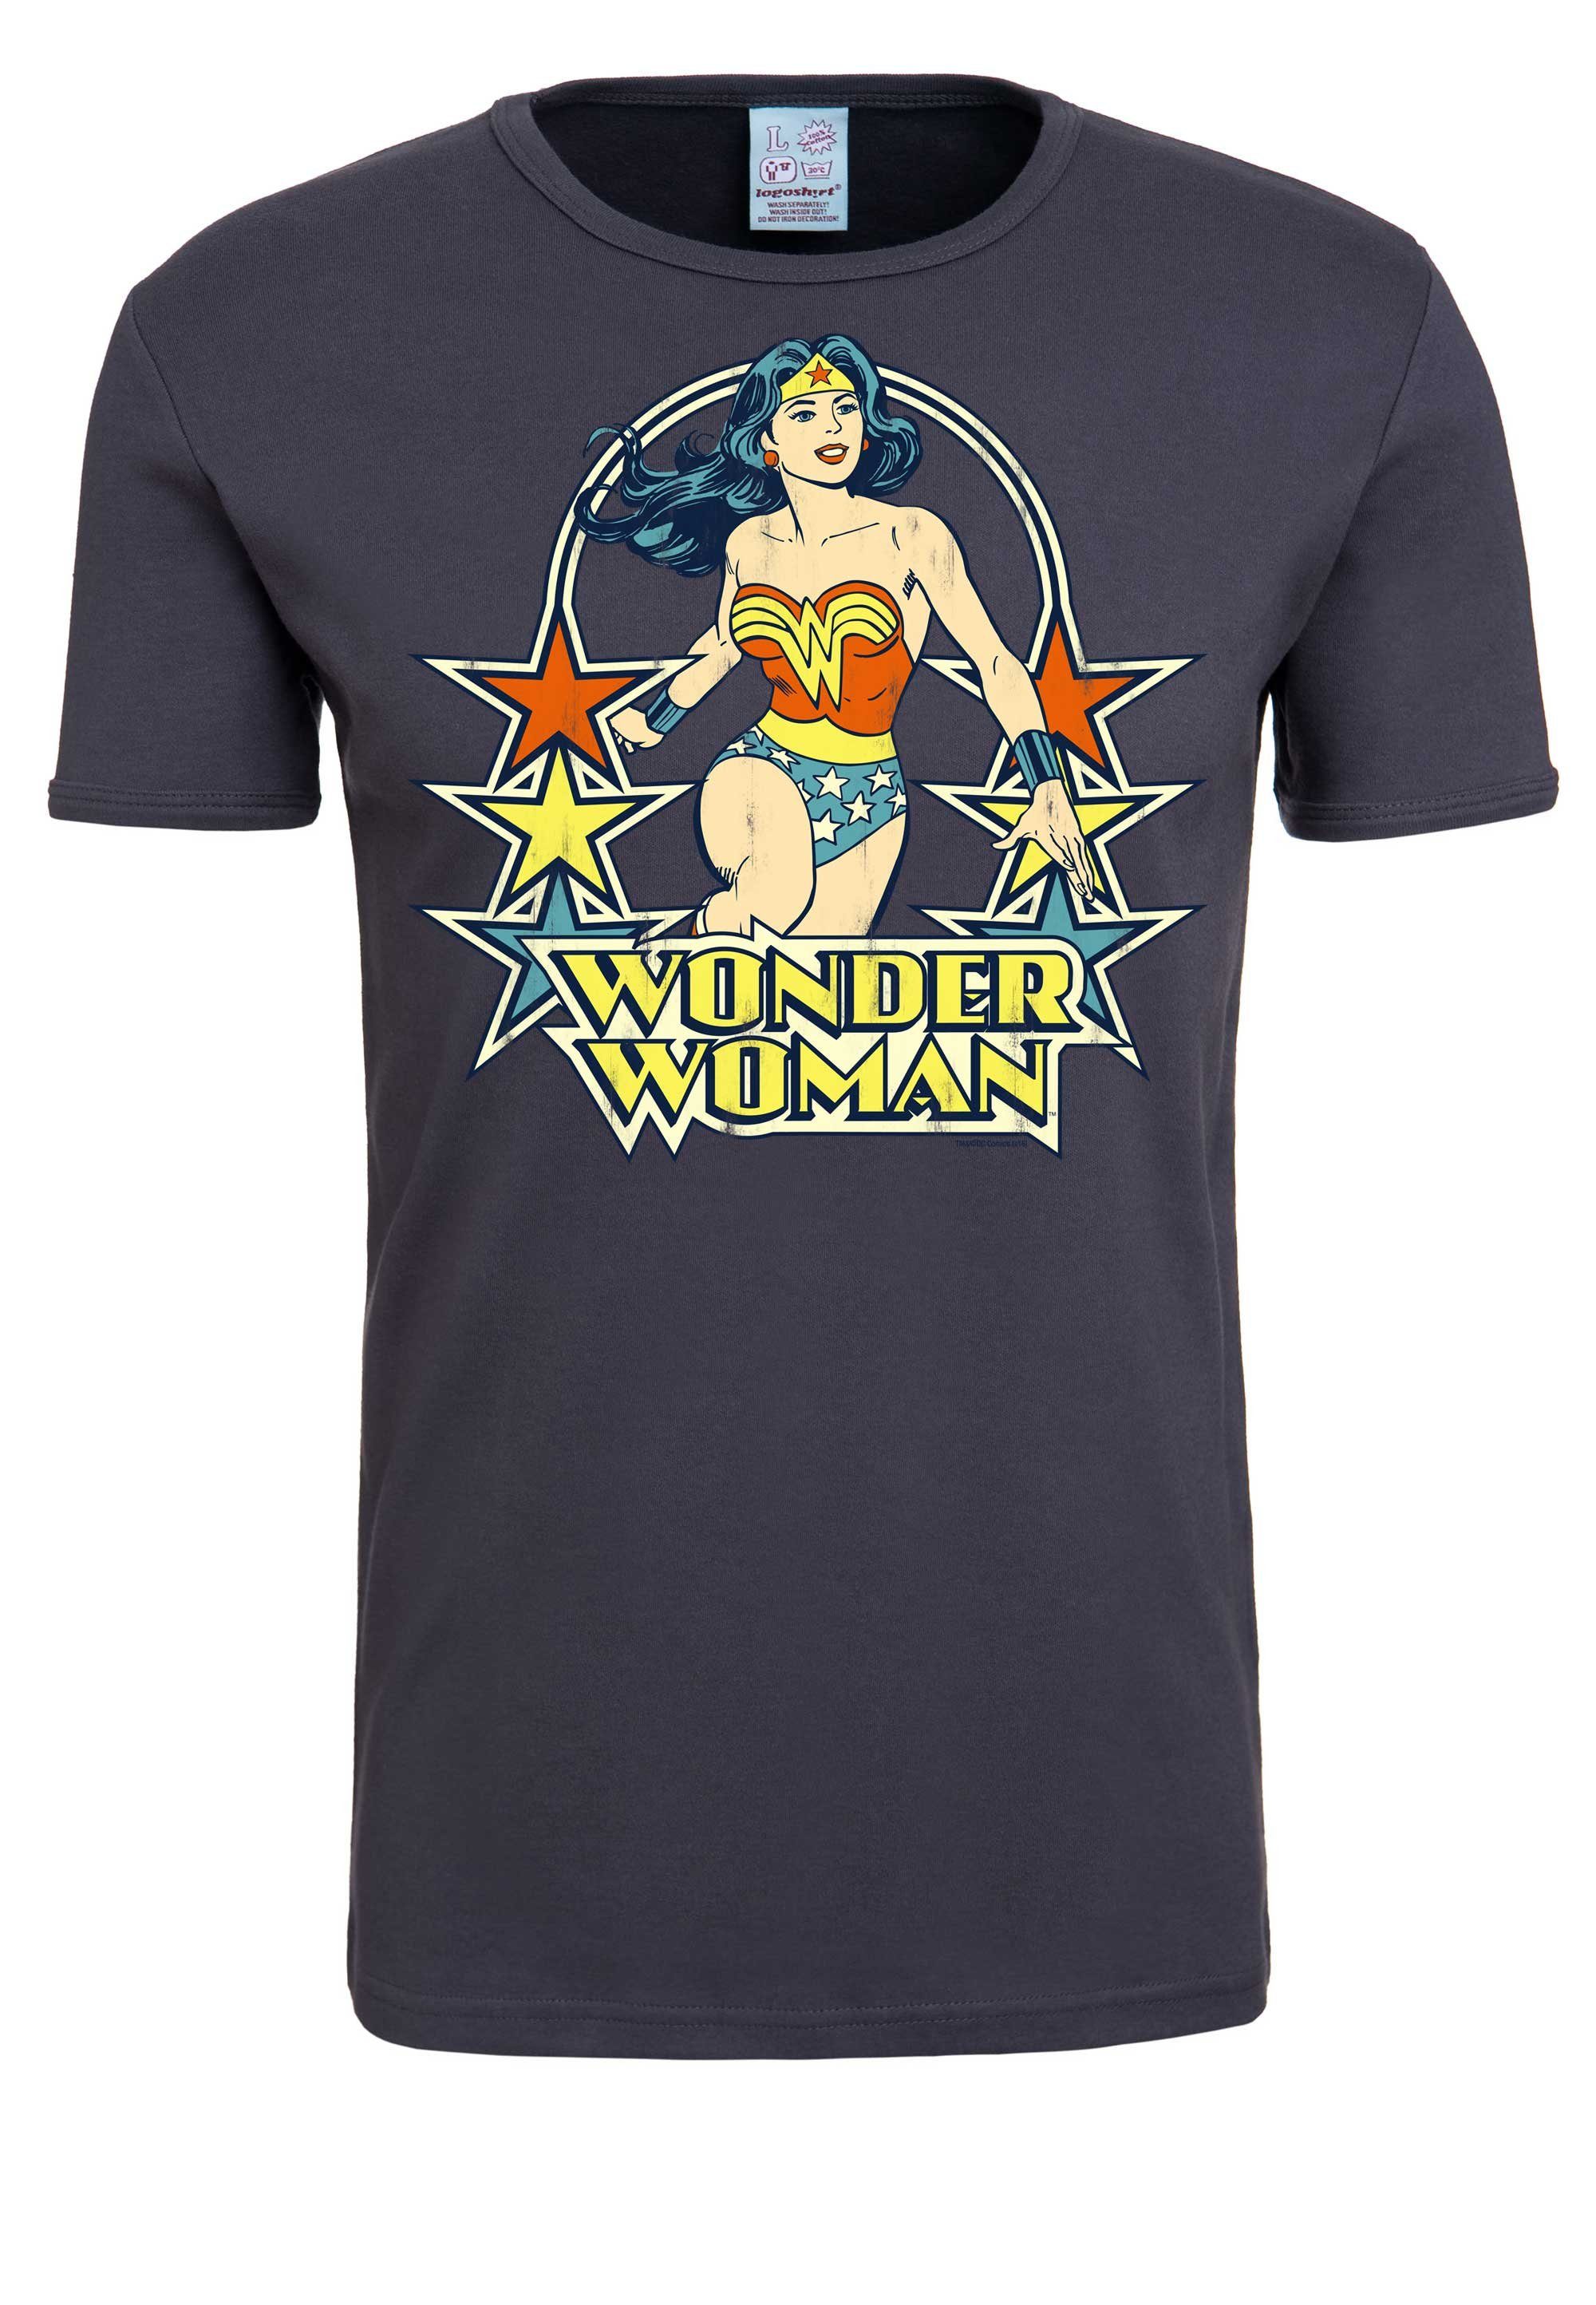 – Woman Stars T-Shirt LOGOSHIRT Originaldesign Wonder blau-grau mit lizenziertem